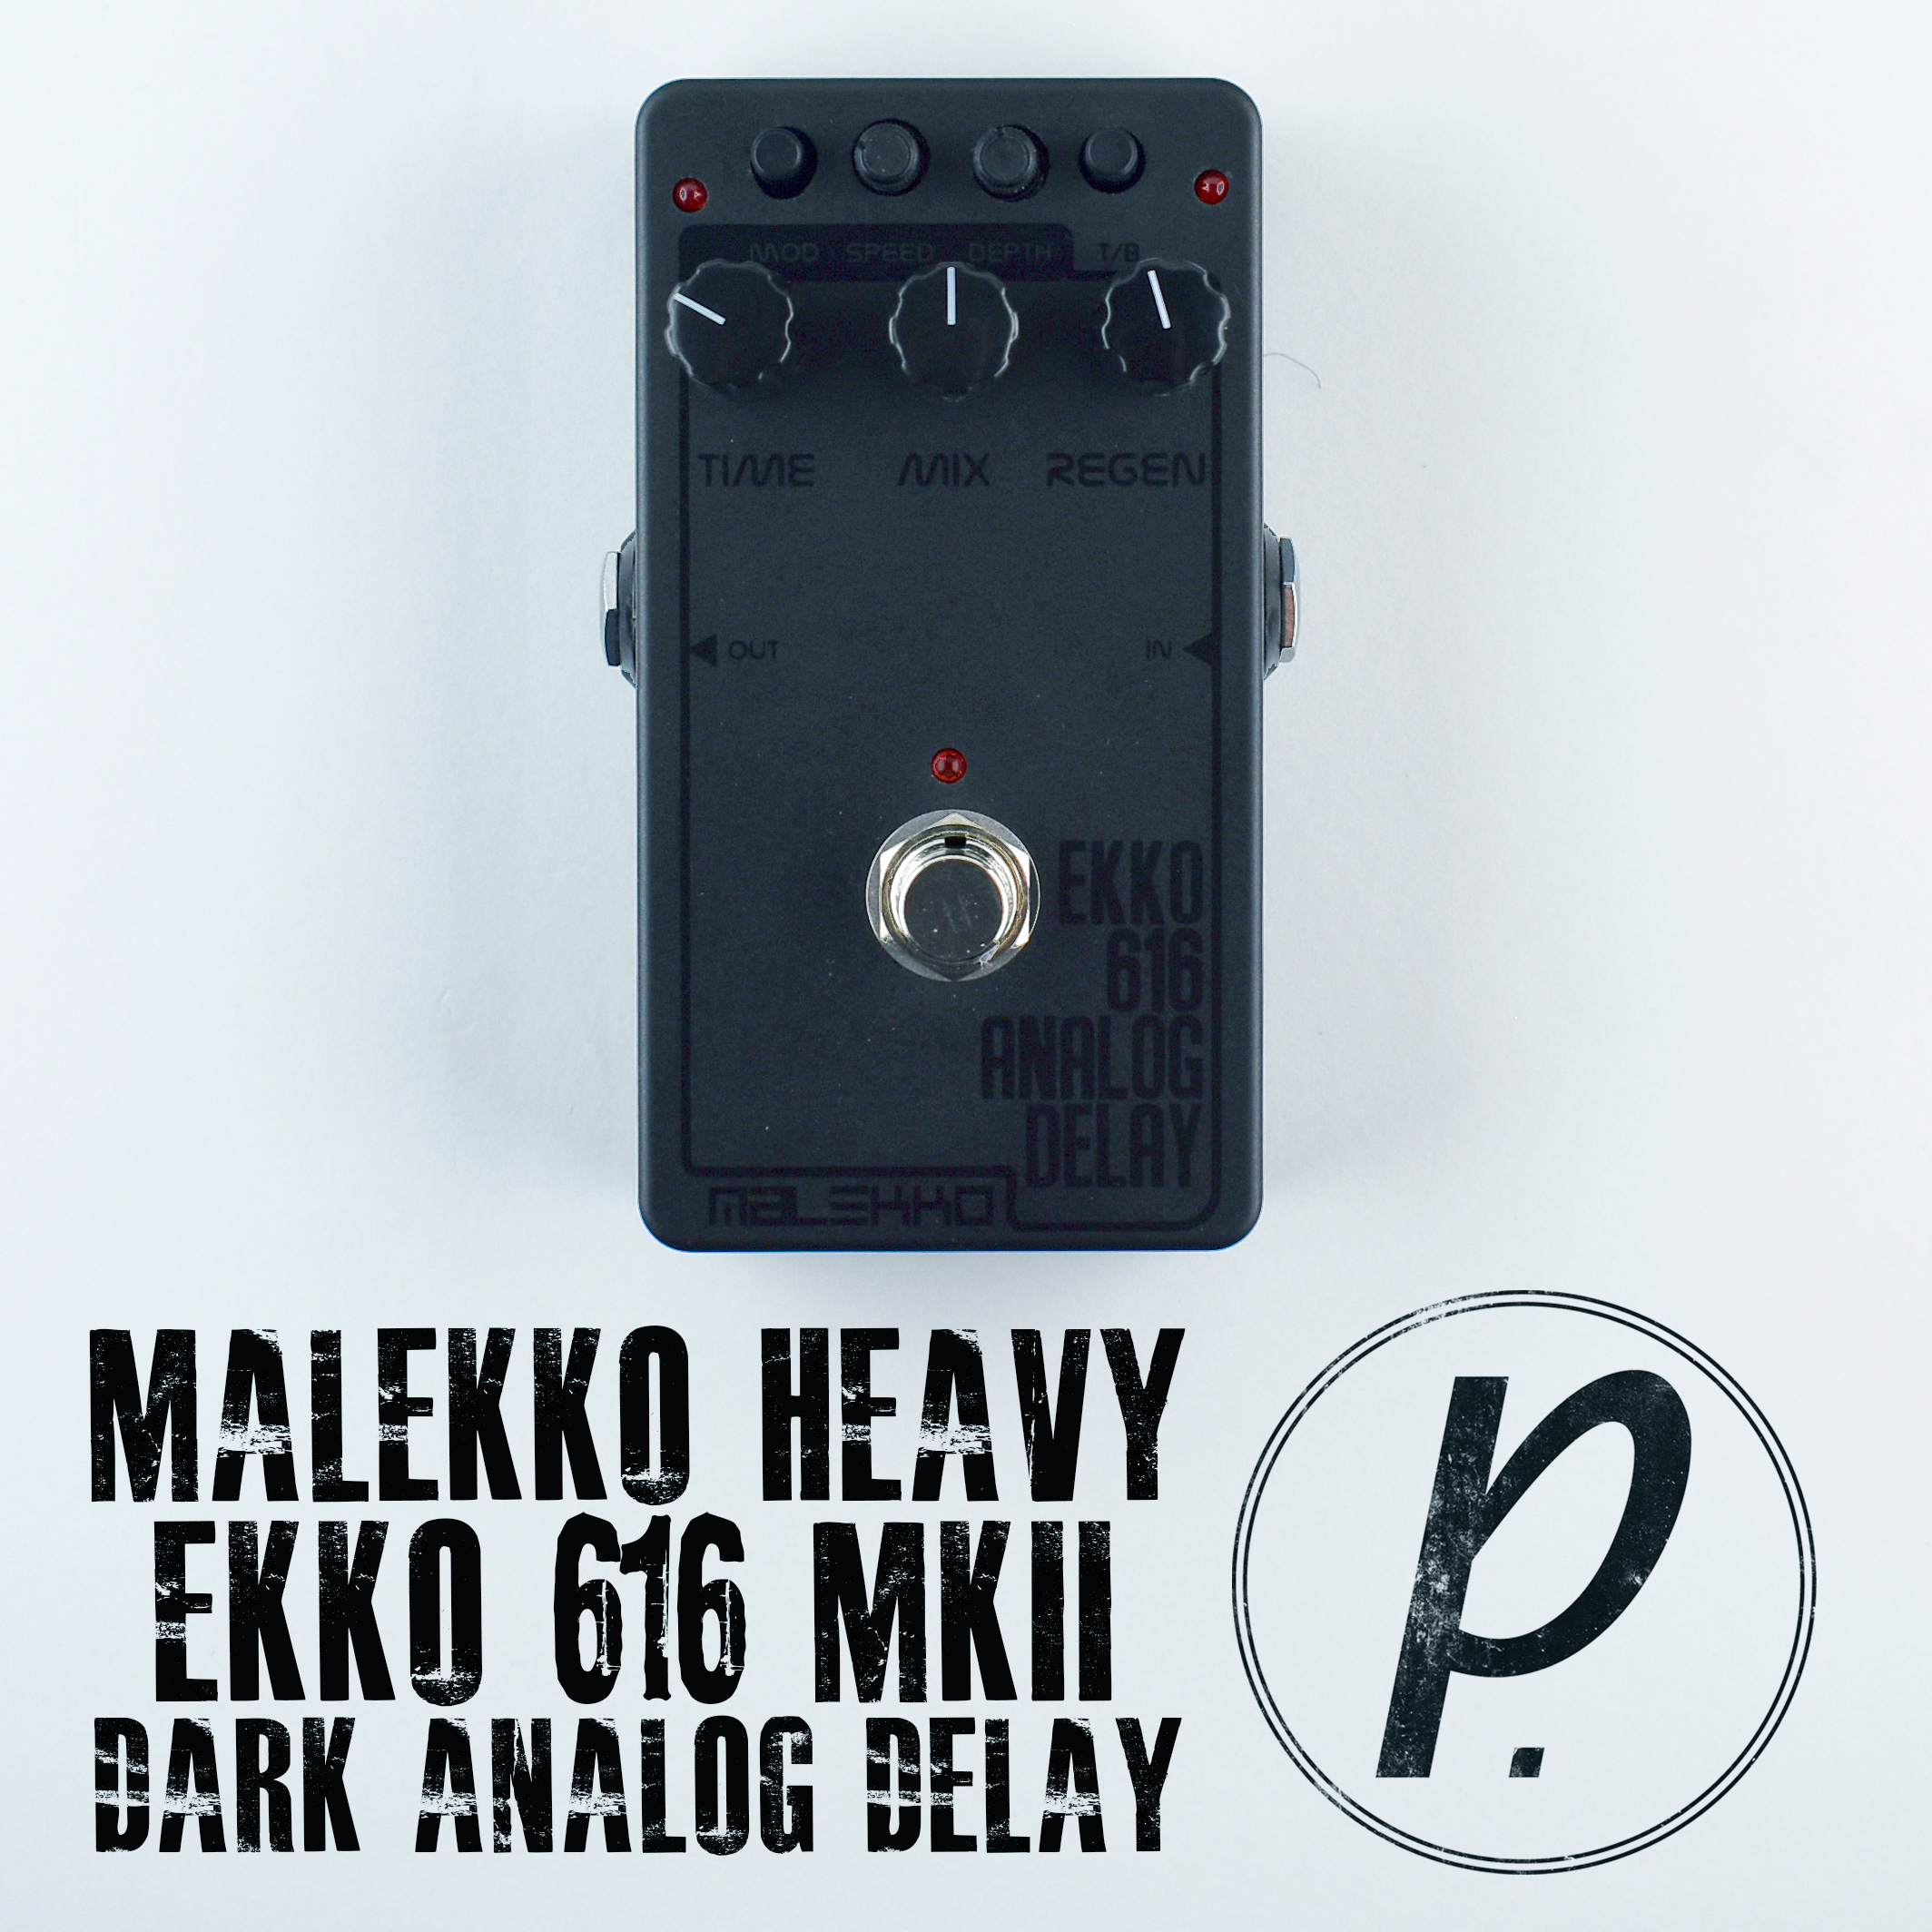 Malekko, Ekko 616